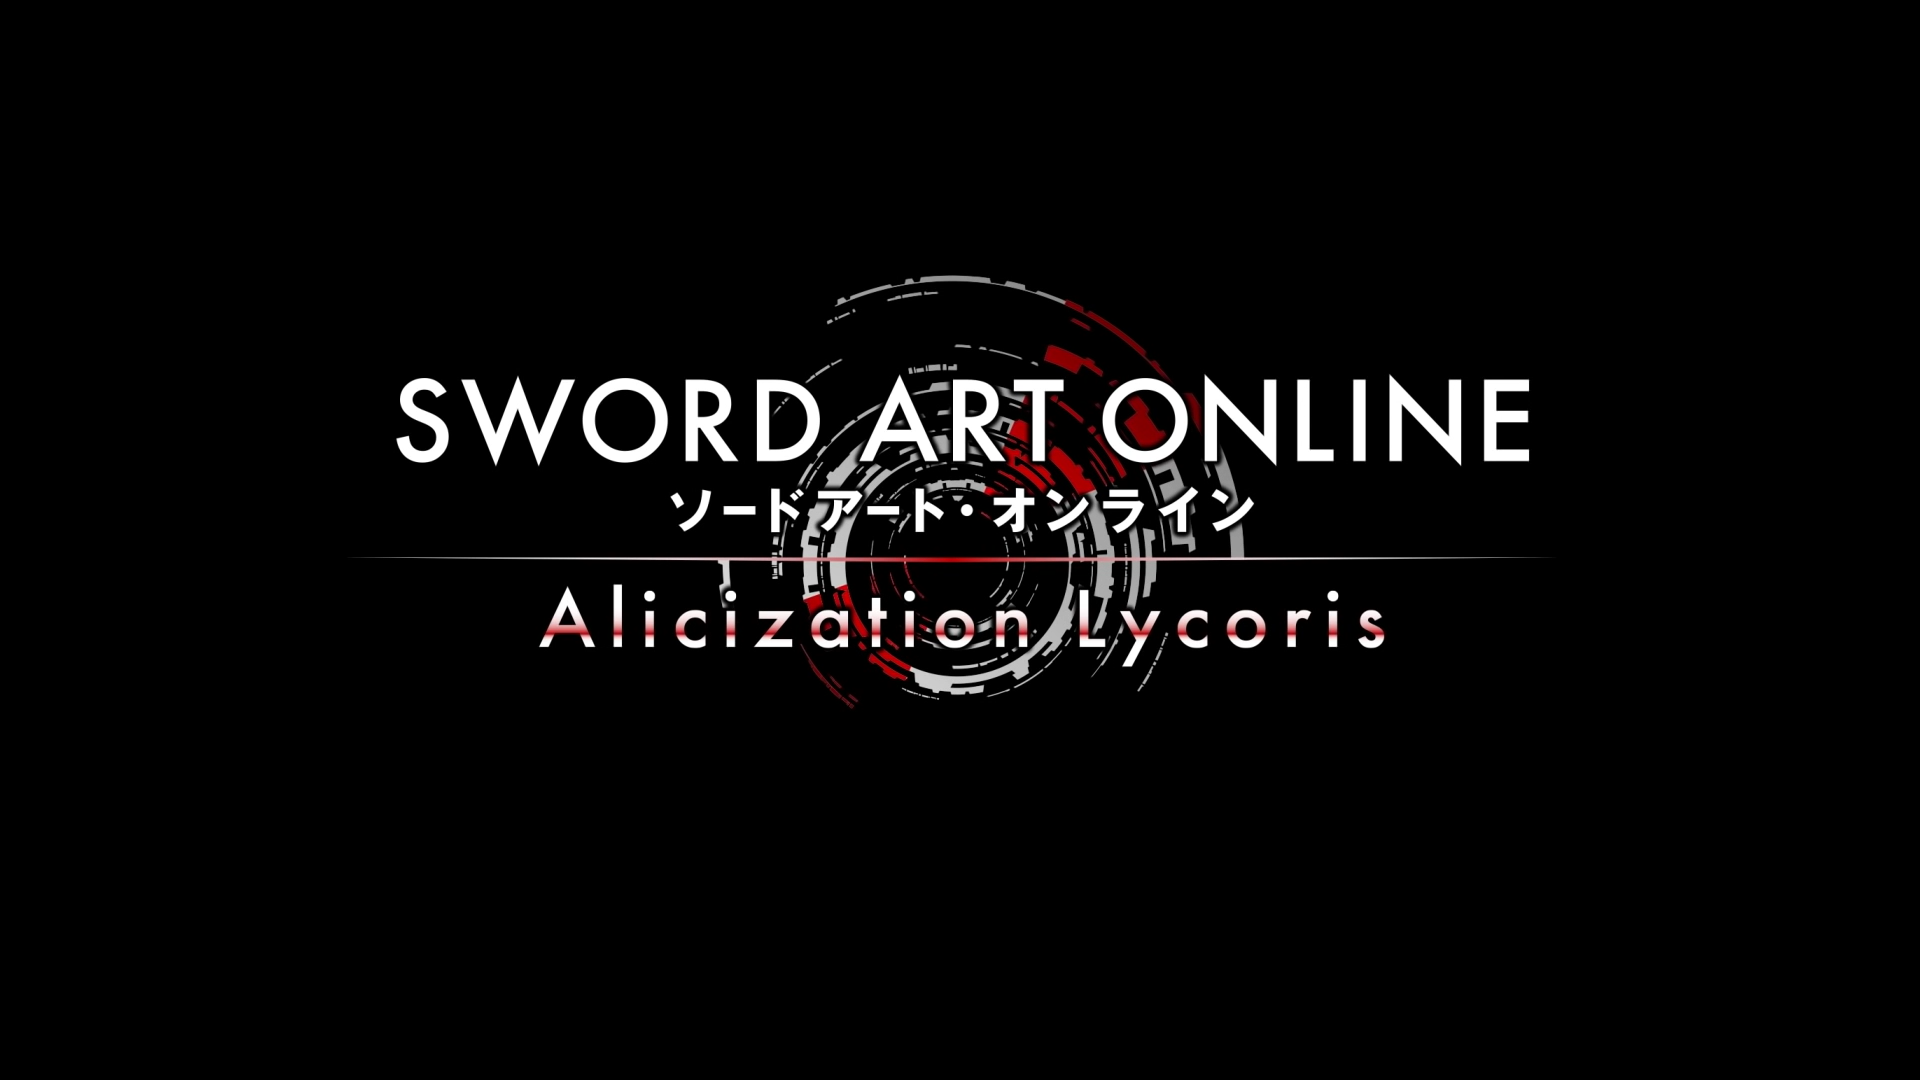 SWORD ART ONLINE Alicization Lycoris announced